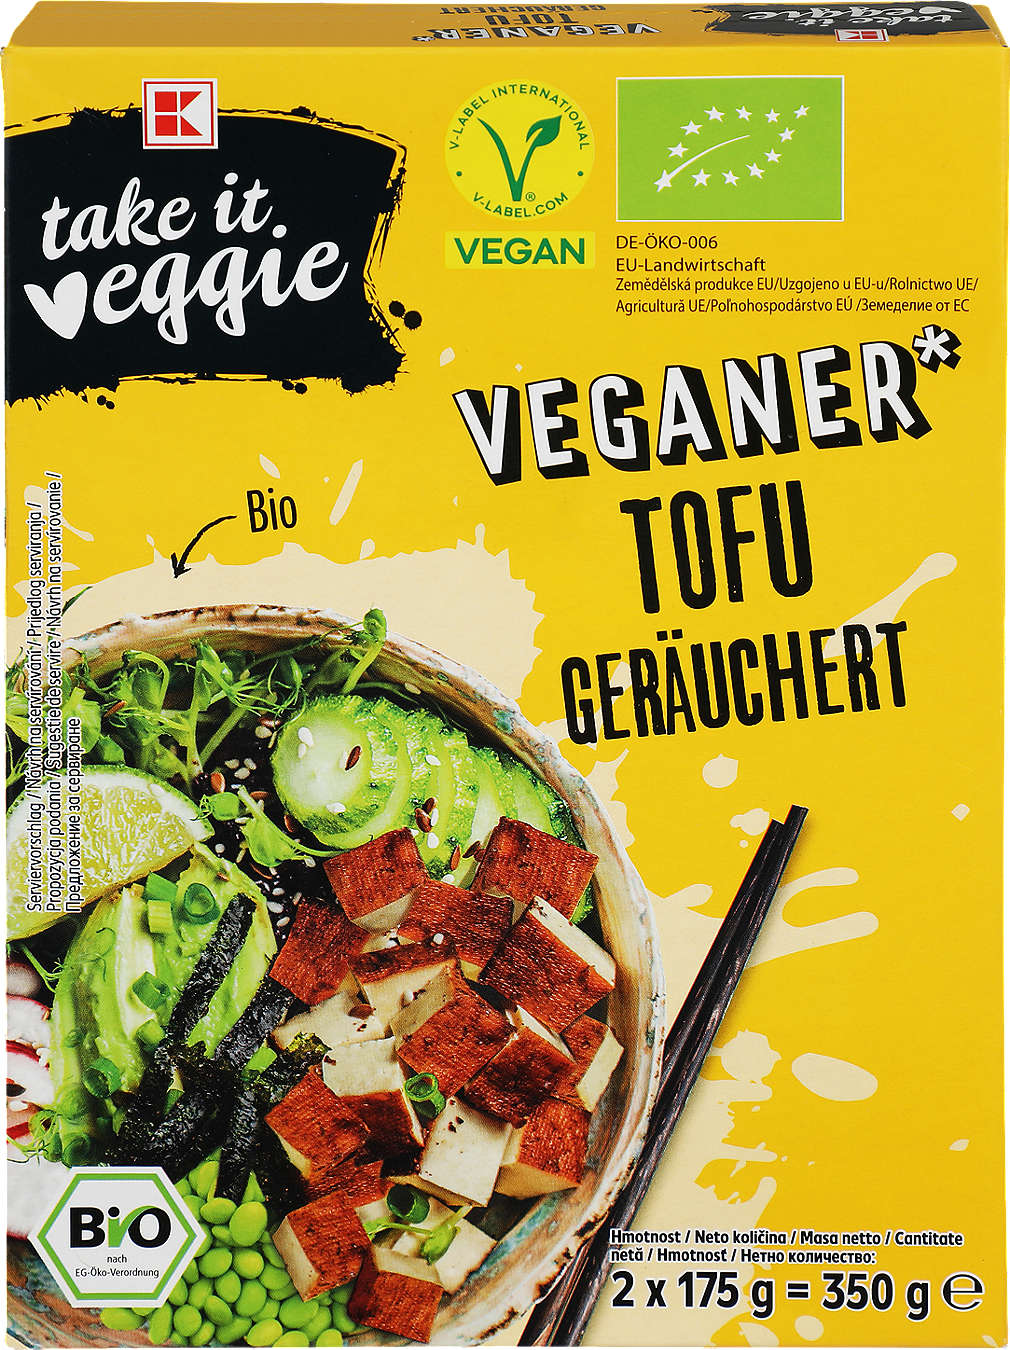 Zobrazenie výrobku K-Take it veggie BIO Tofu údené